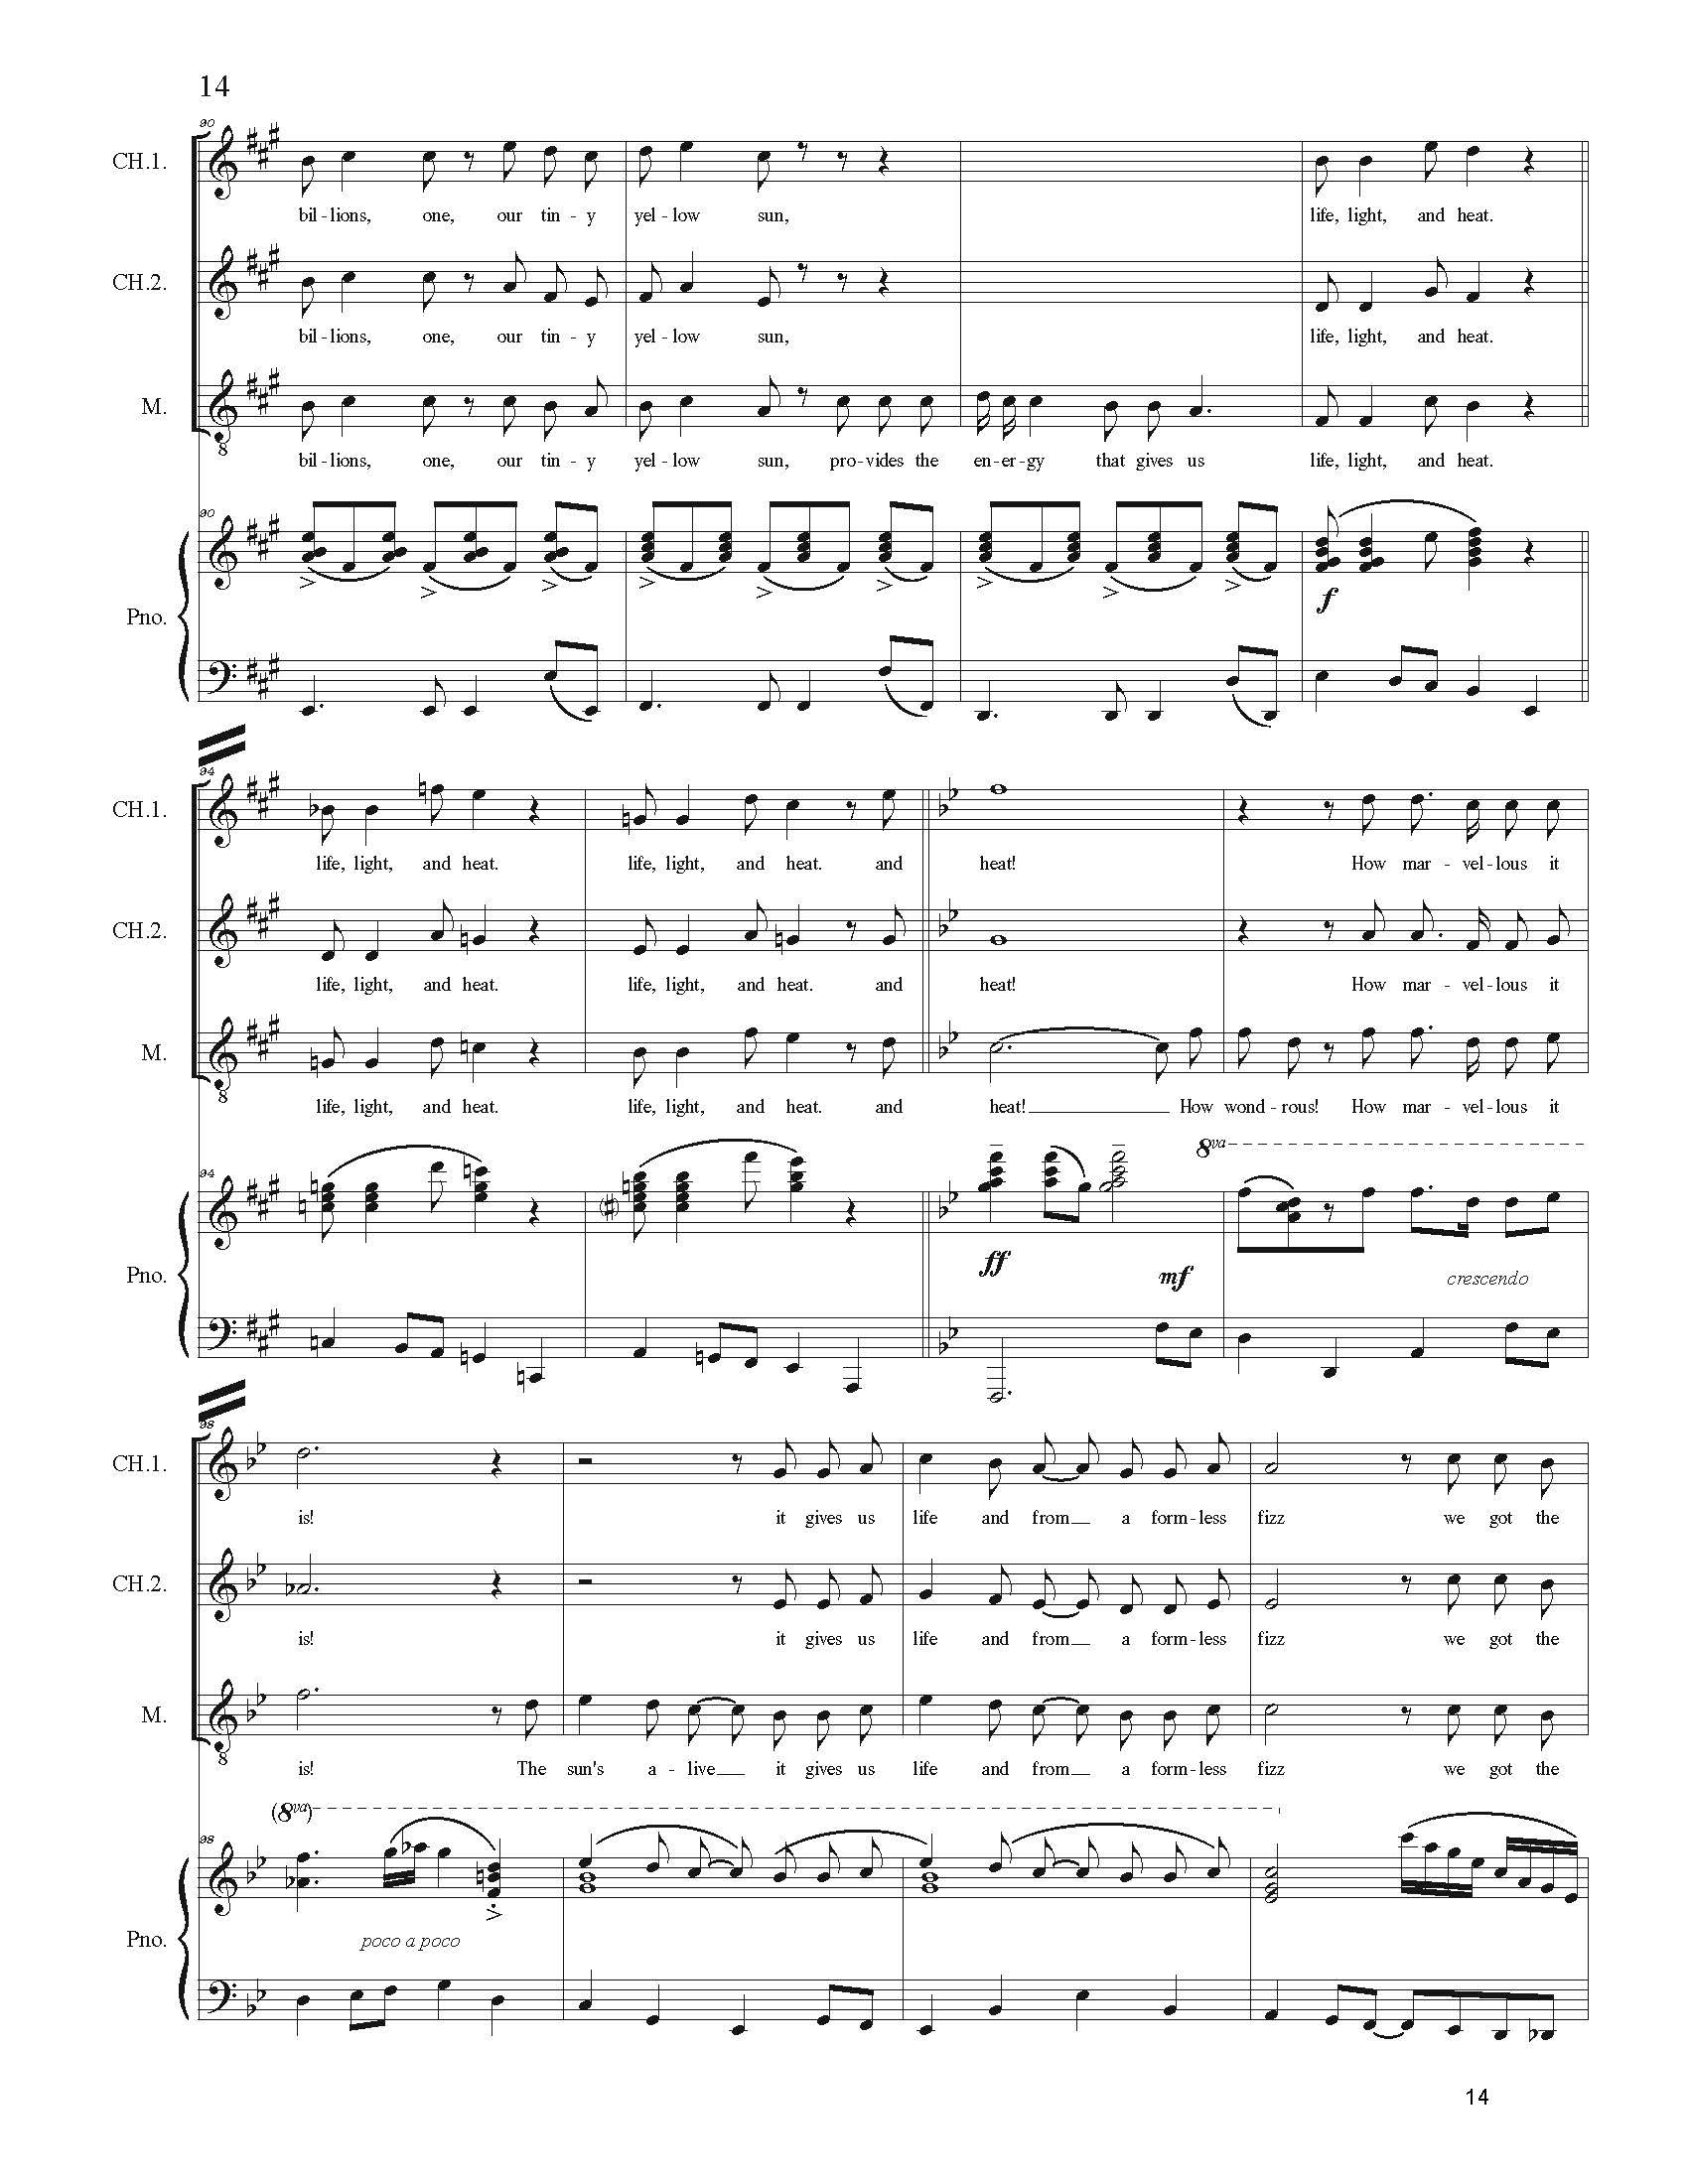 FULL PIANO VOCAL SCORE DRAFT 1 - Score_Page_014.jpg